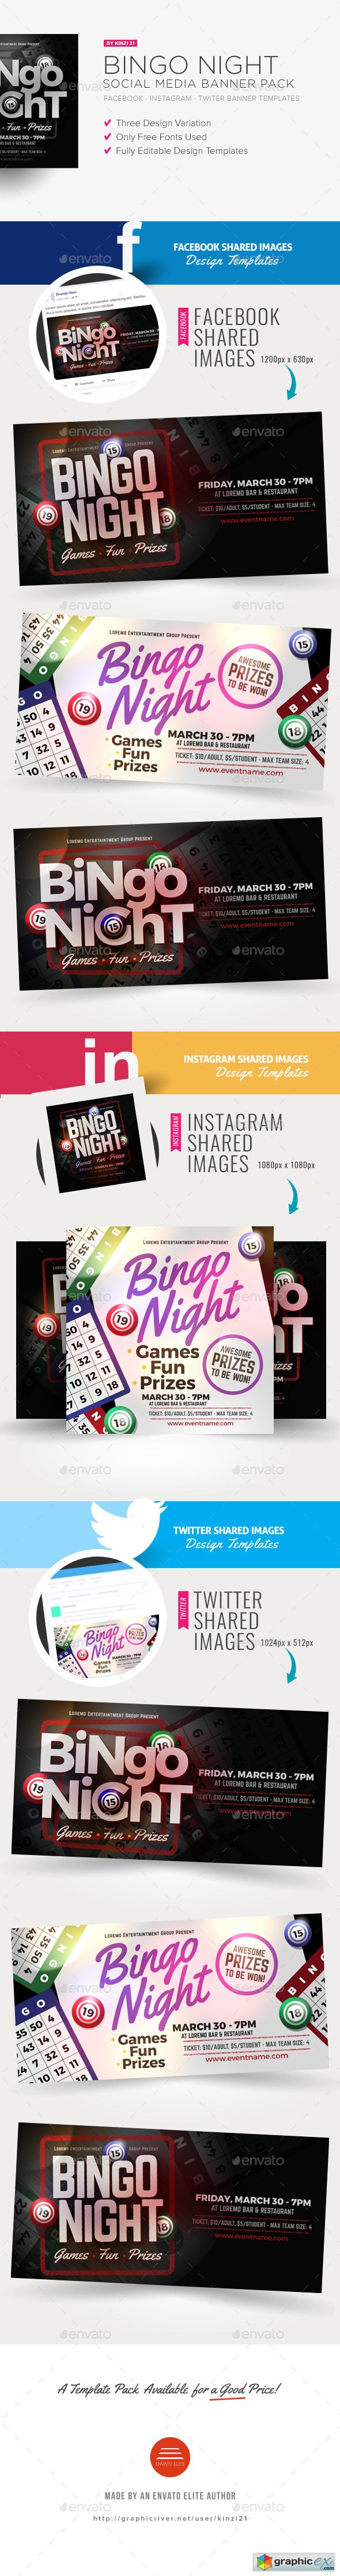 Bingo Night Social Media Banner Pack